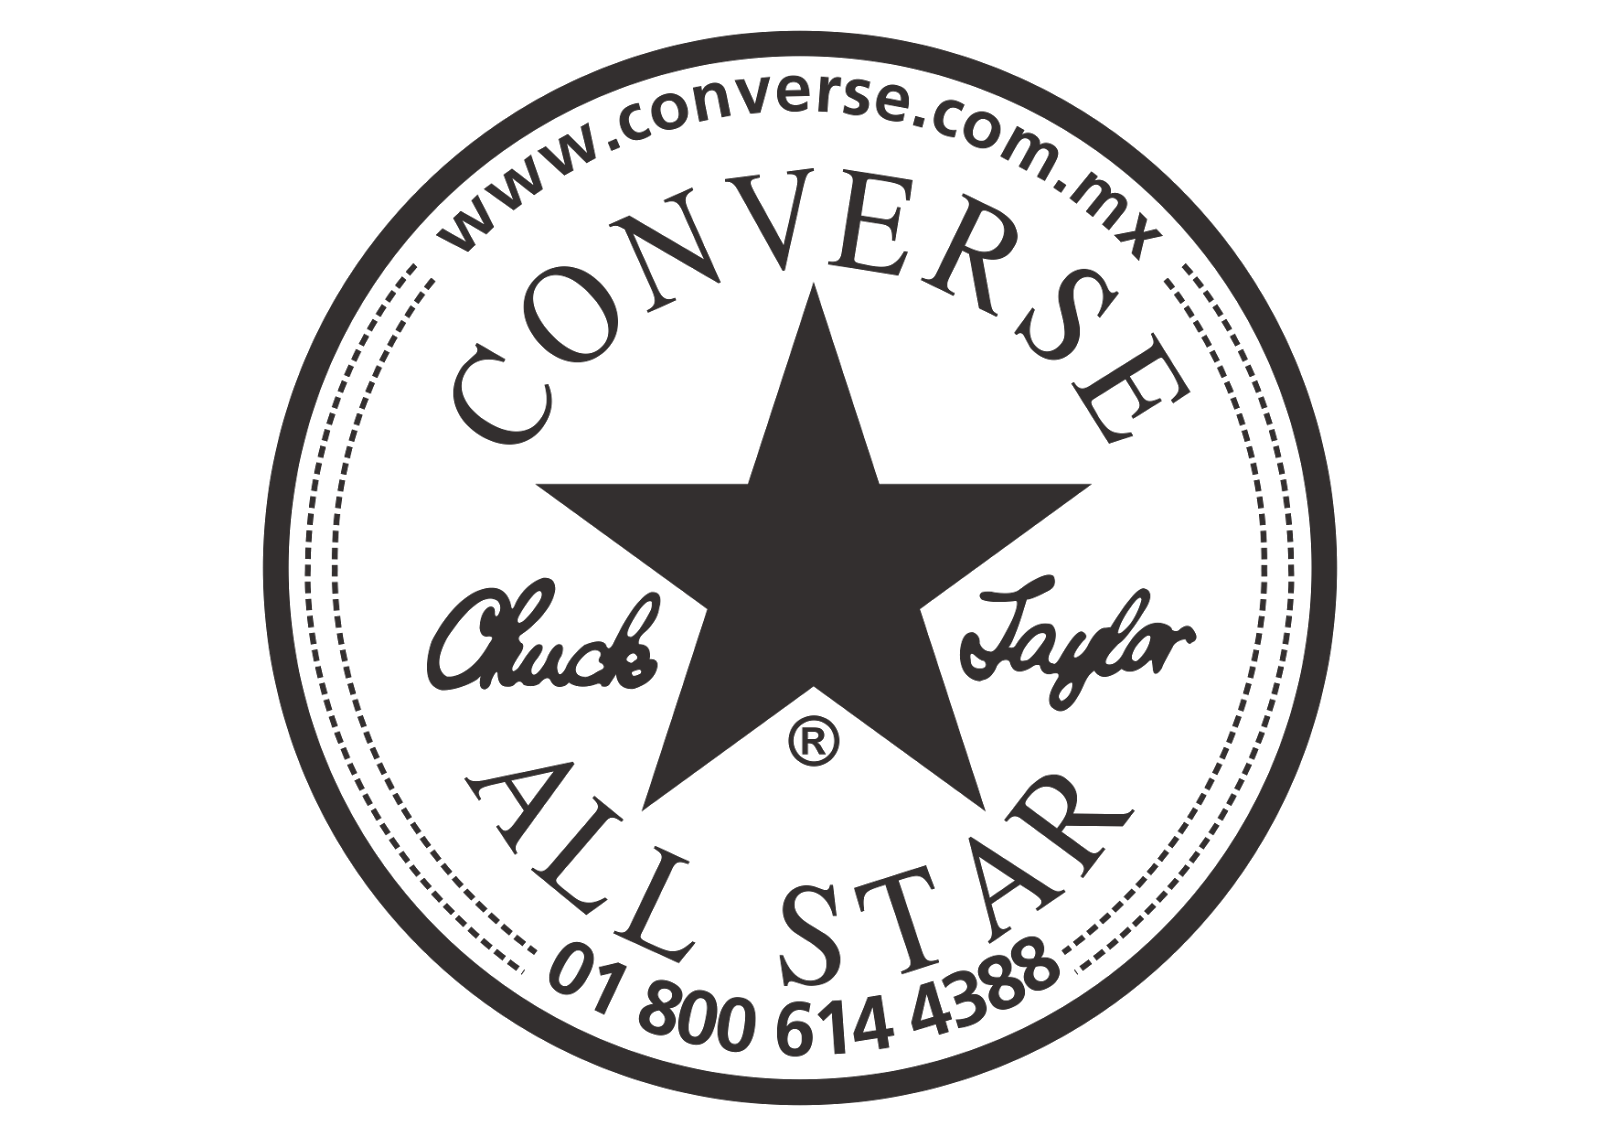 converse clipart all star converse